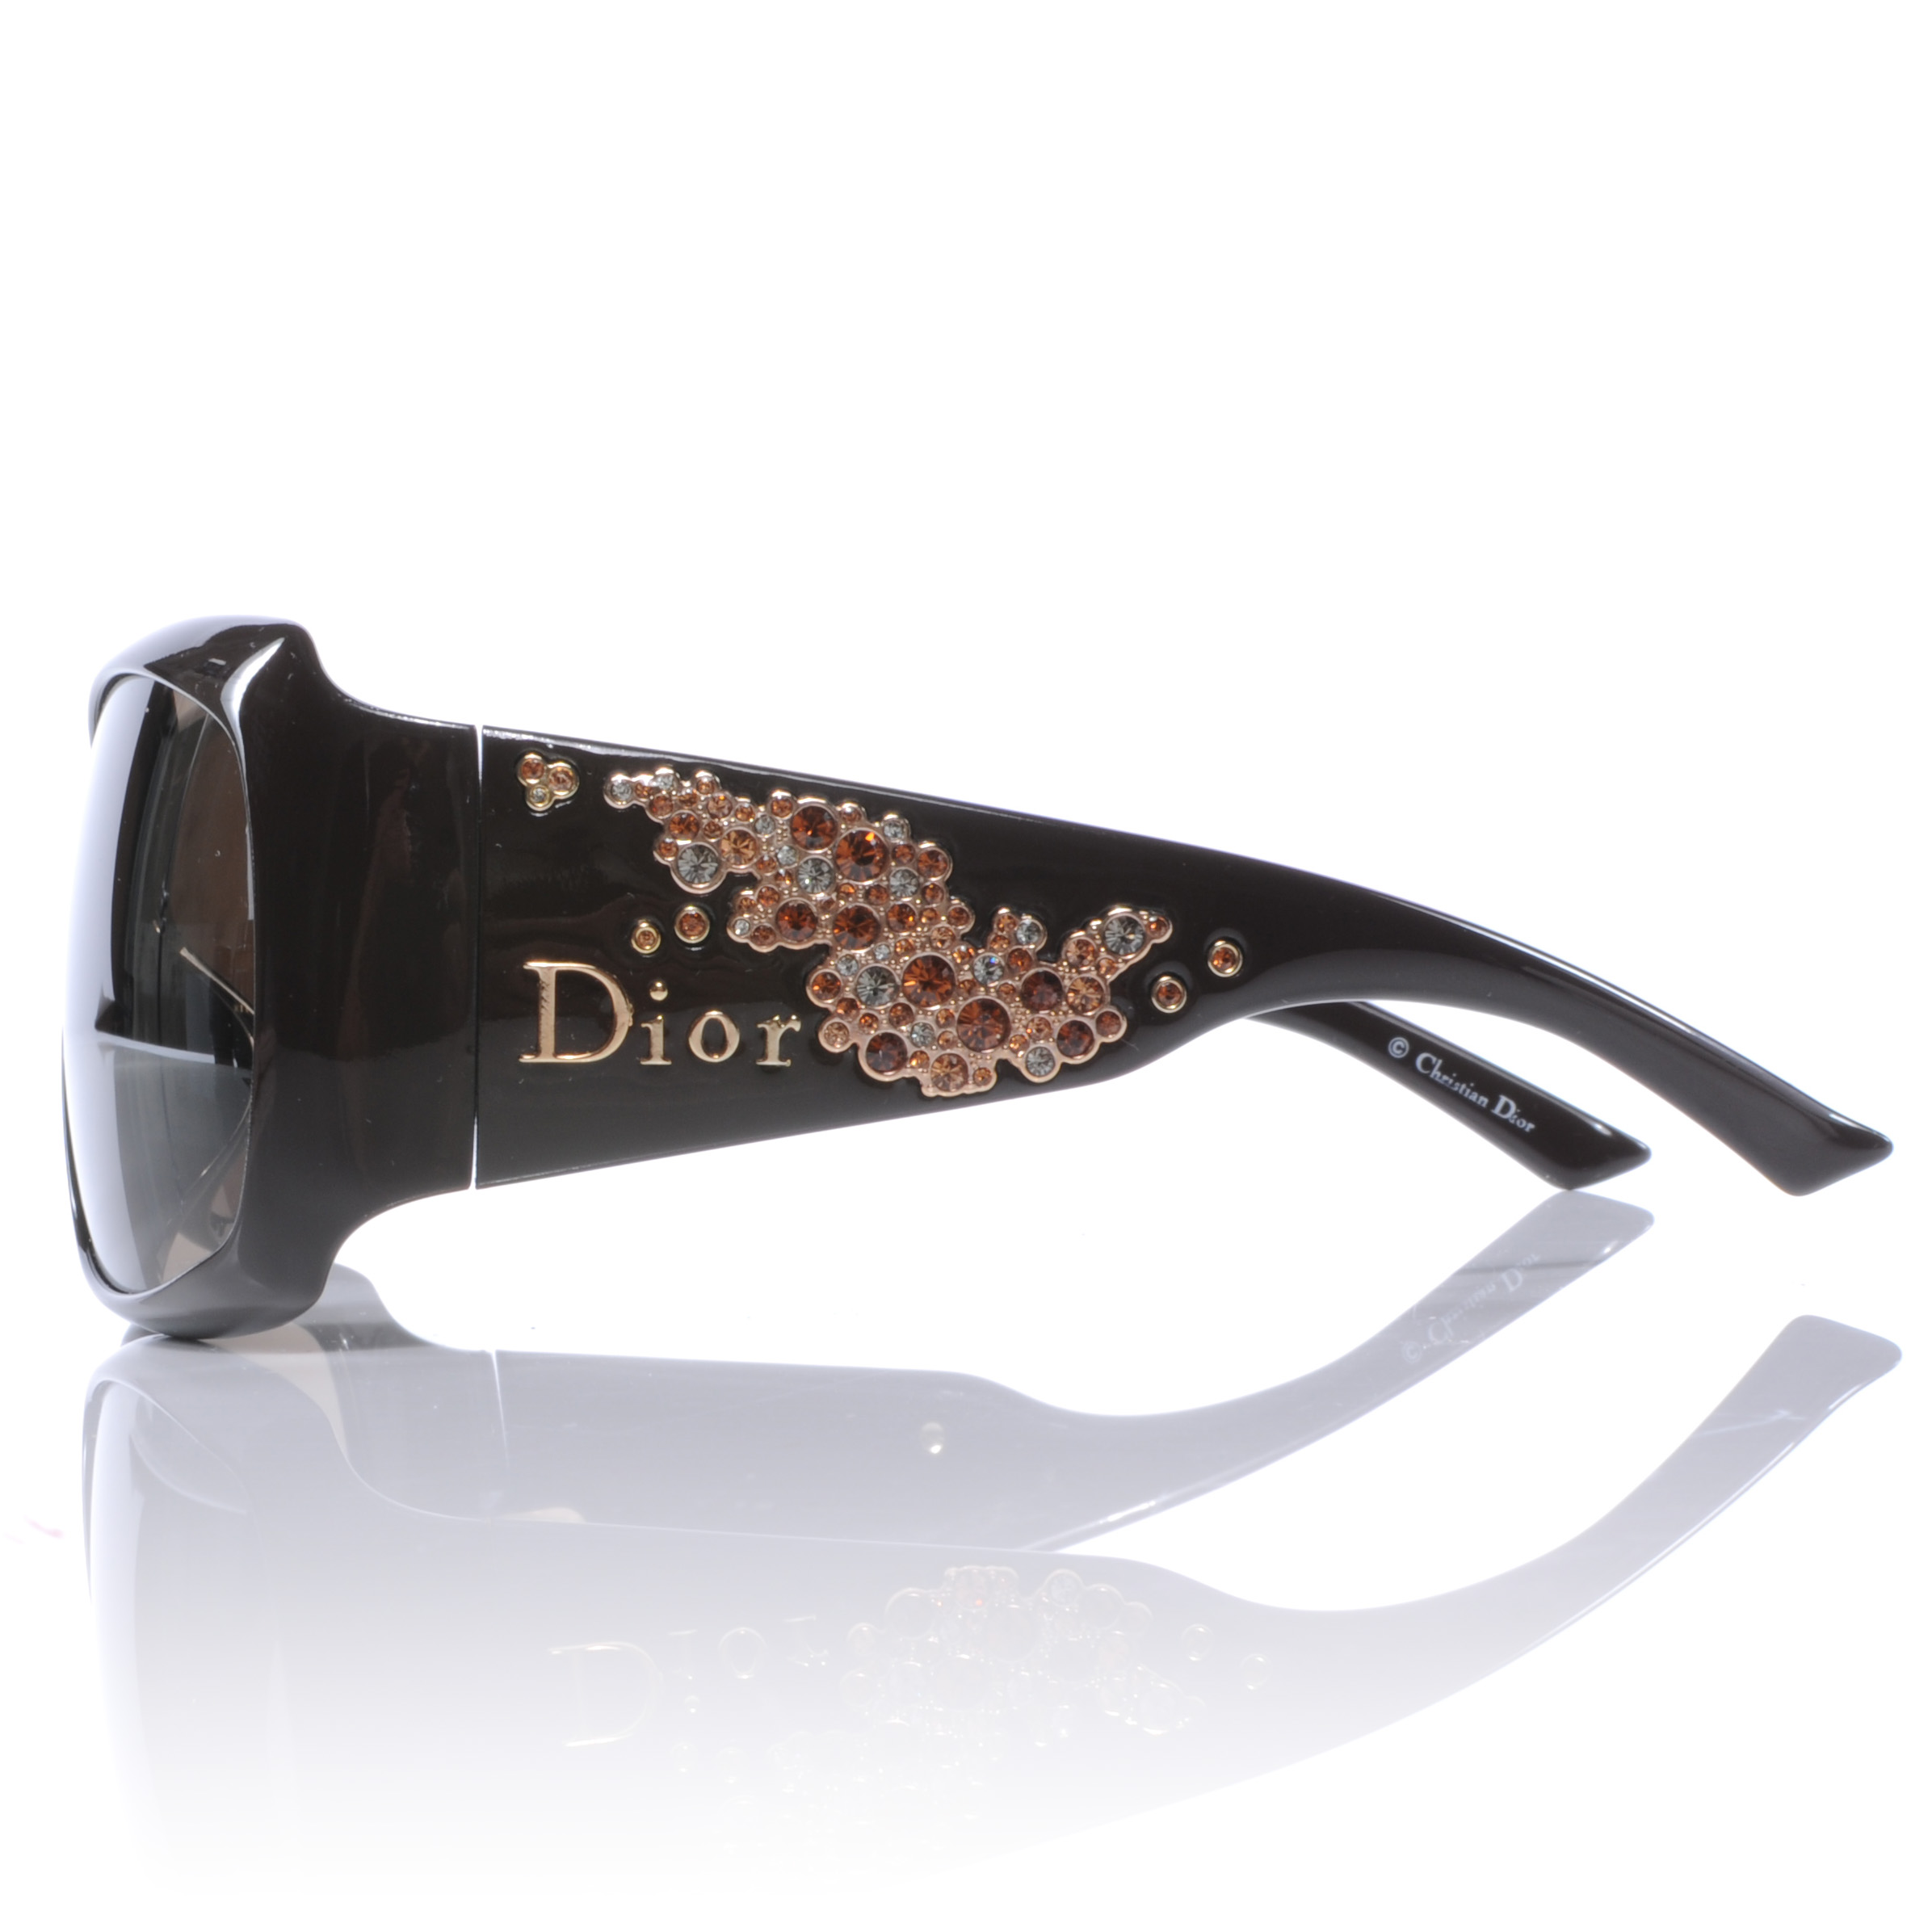 dior sunglasses with swarovski crystals